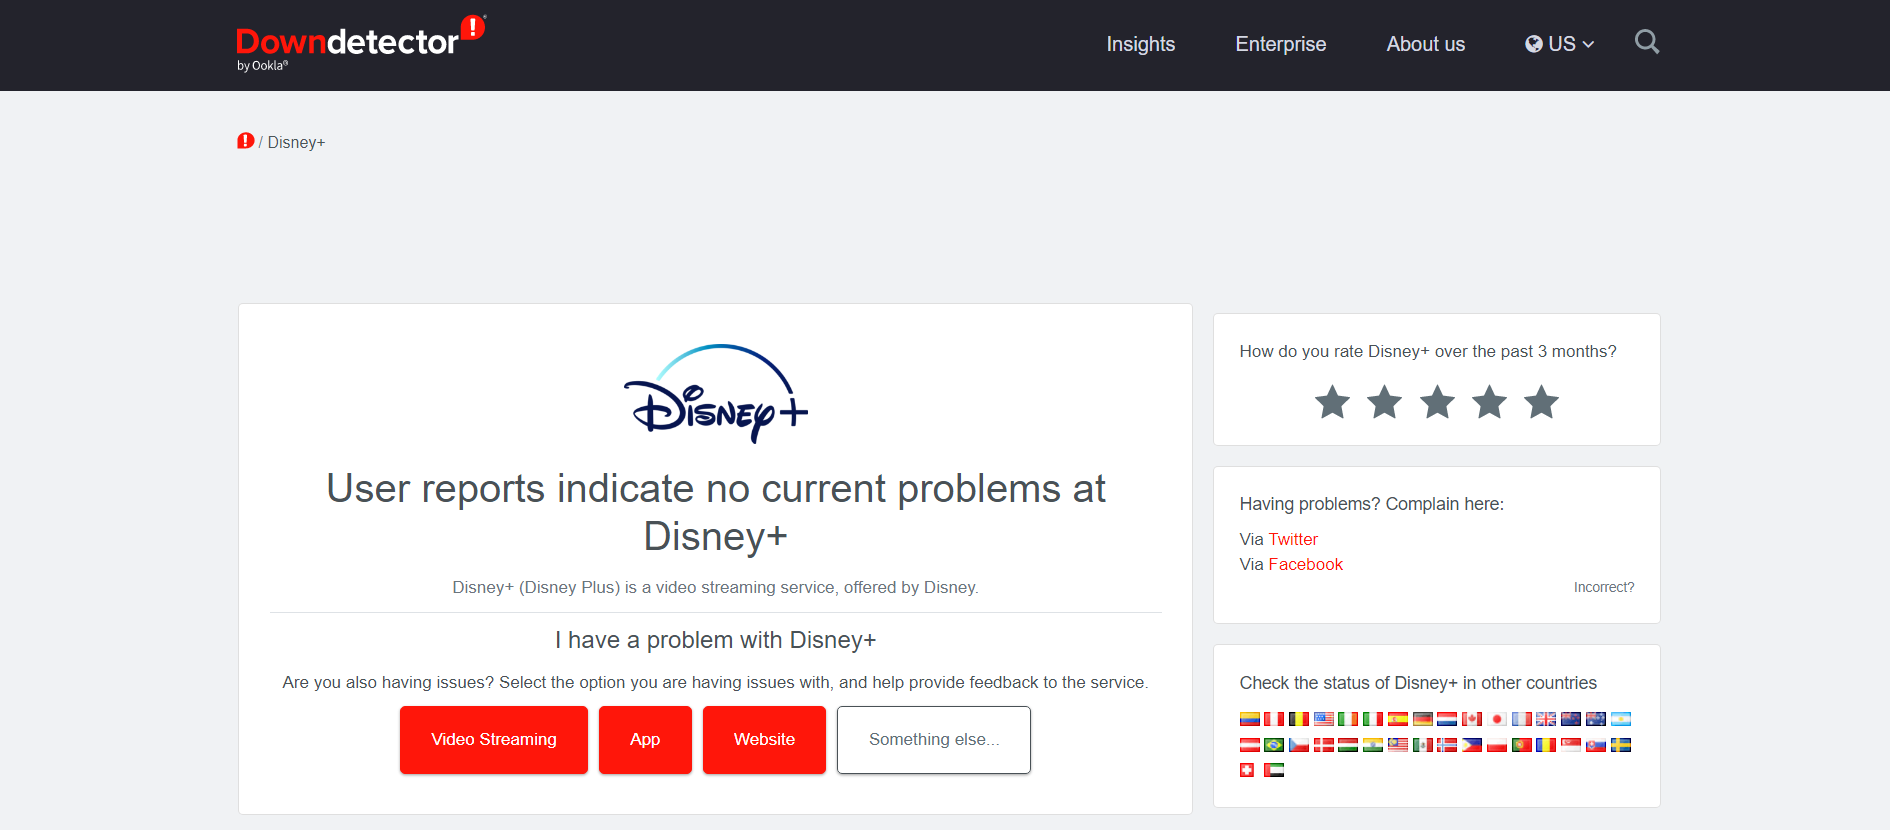 Disney+ Down detector Page